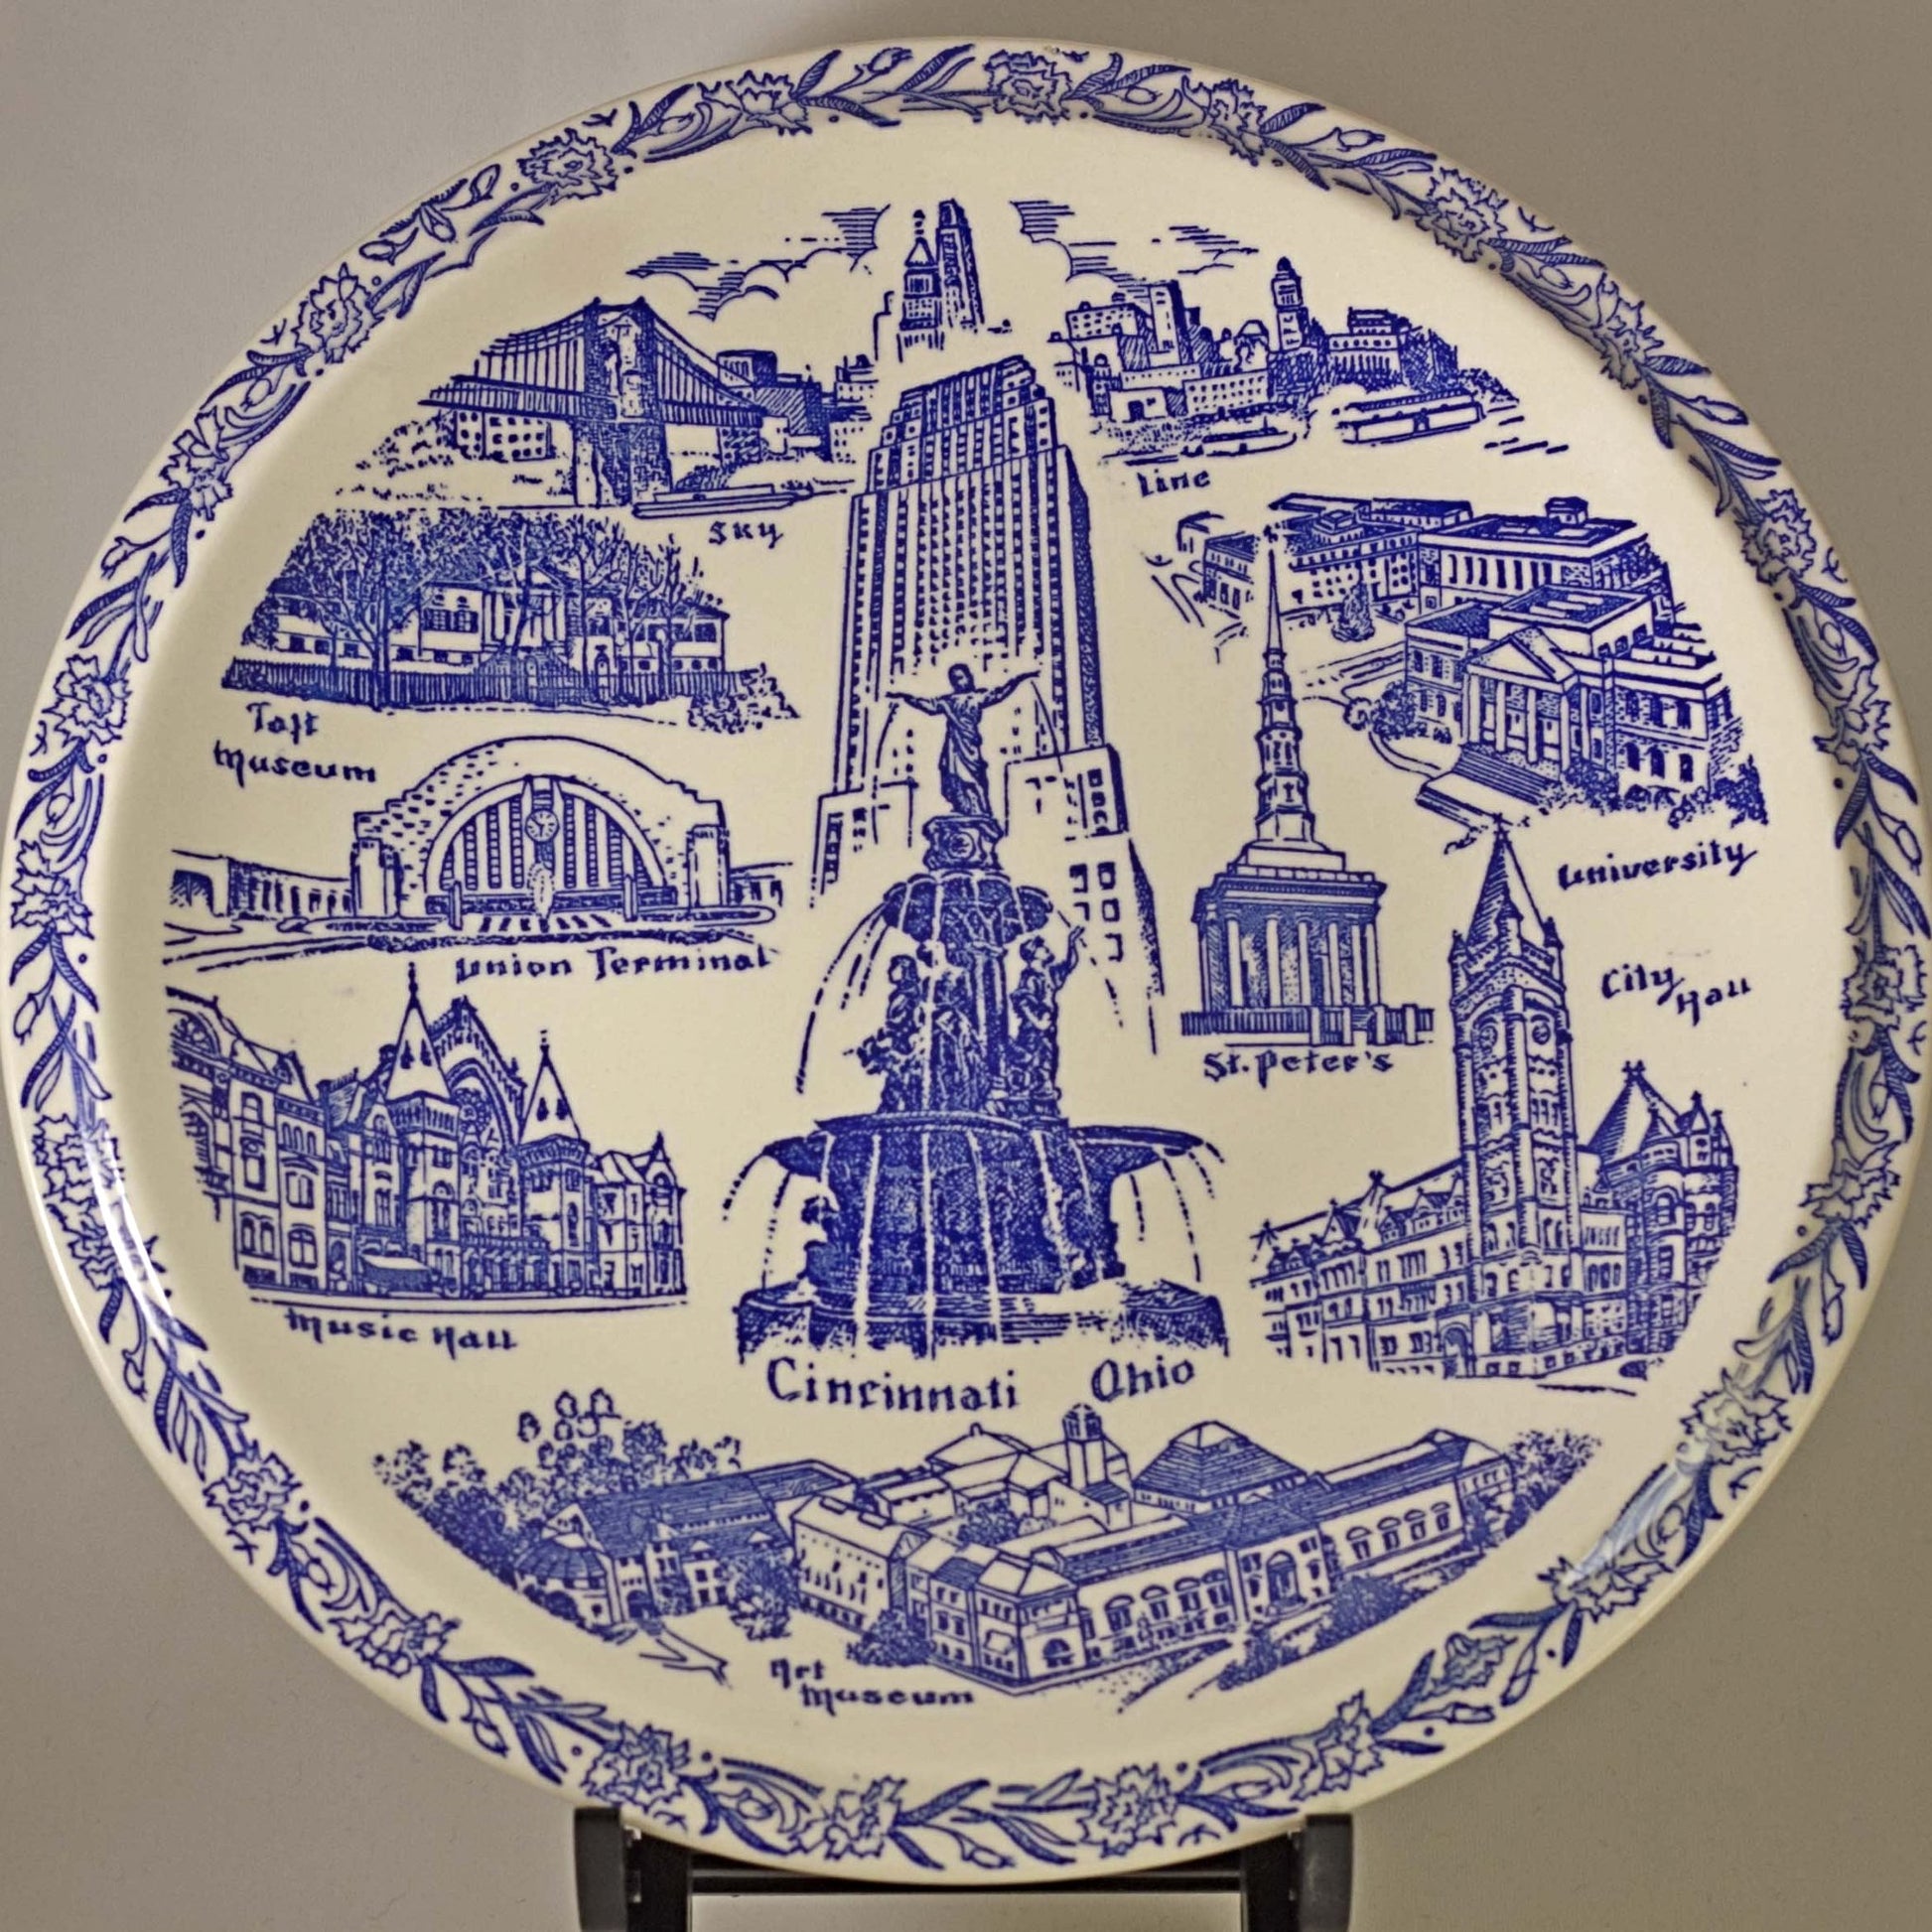 QUEEN CITY OF THE WEST Cincinnati Ohio Souvenir Plate